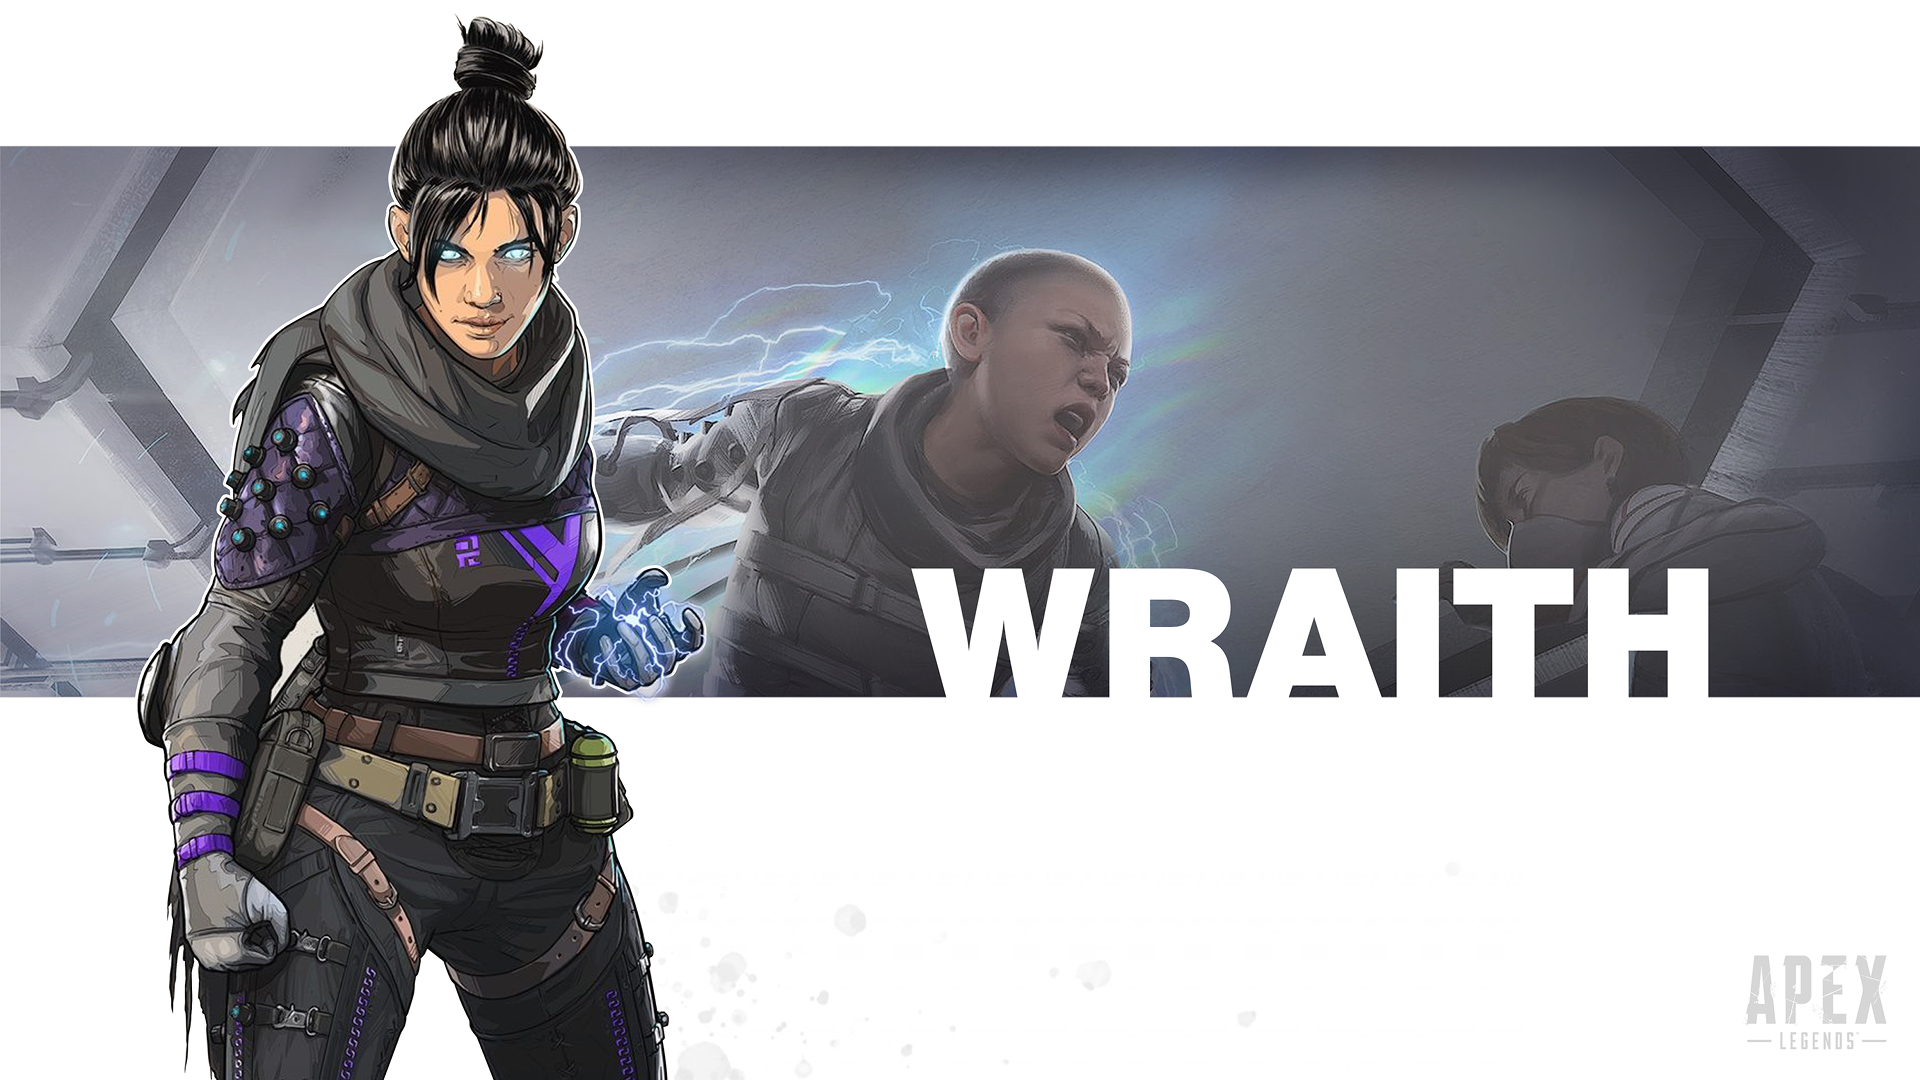 Wraith : Apex Legends (Video Game) 4K wallpaper download